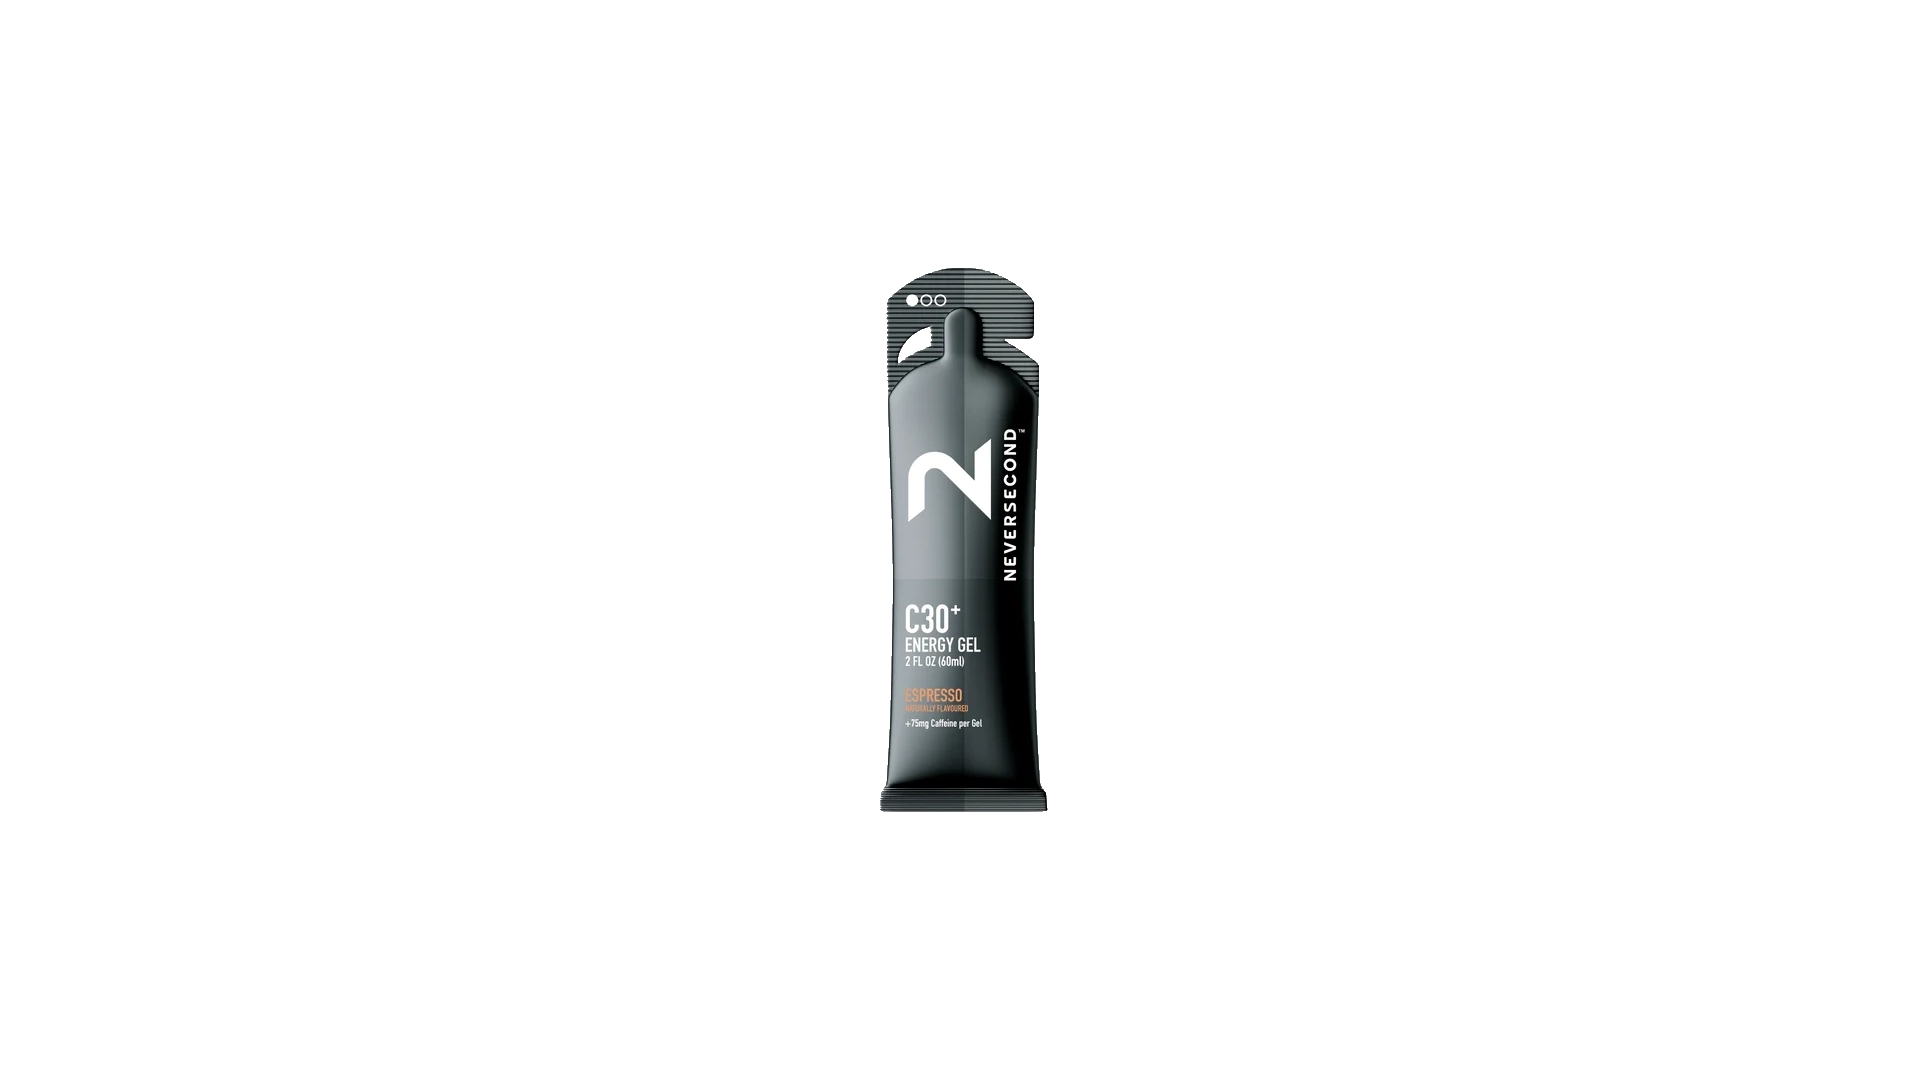 Neversecond C30+ Energy GEL Caffeine 60ml